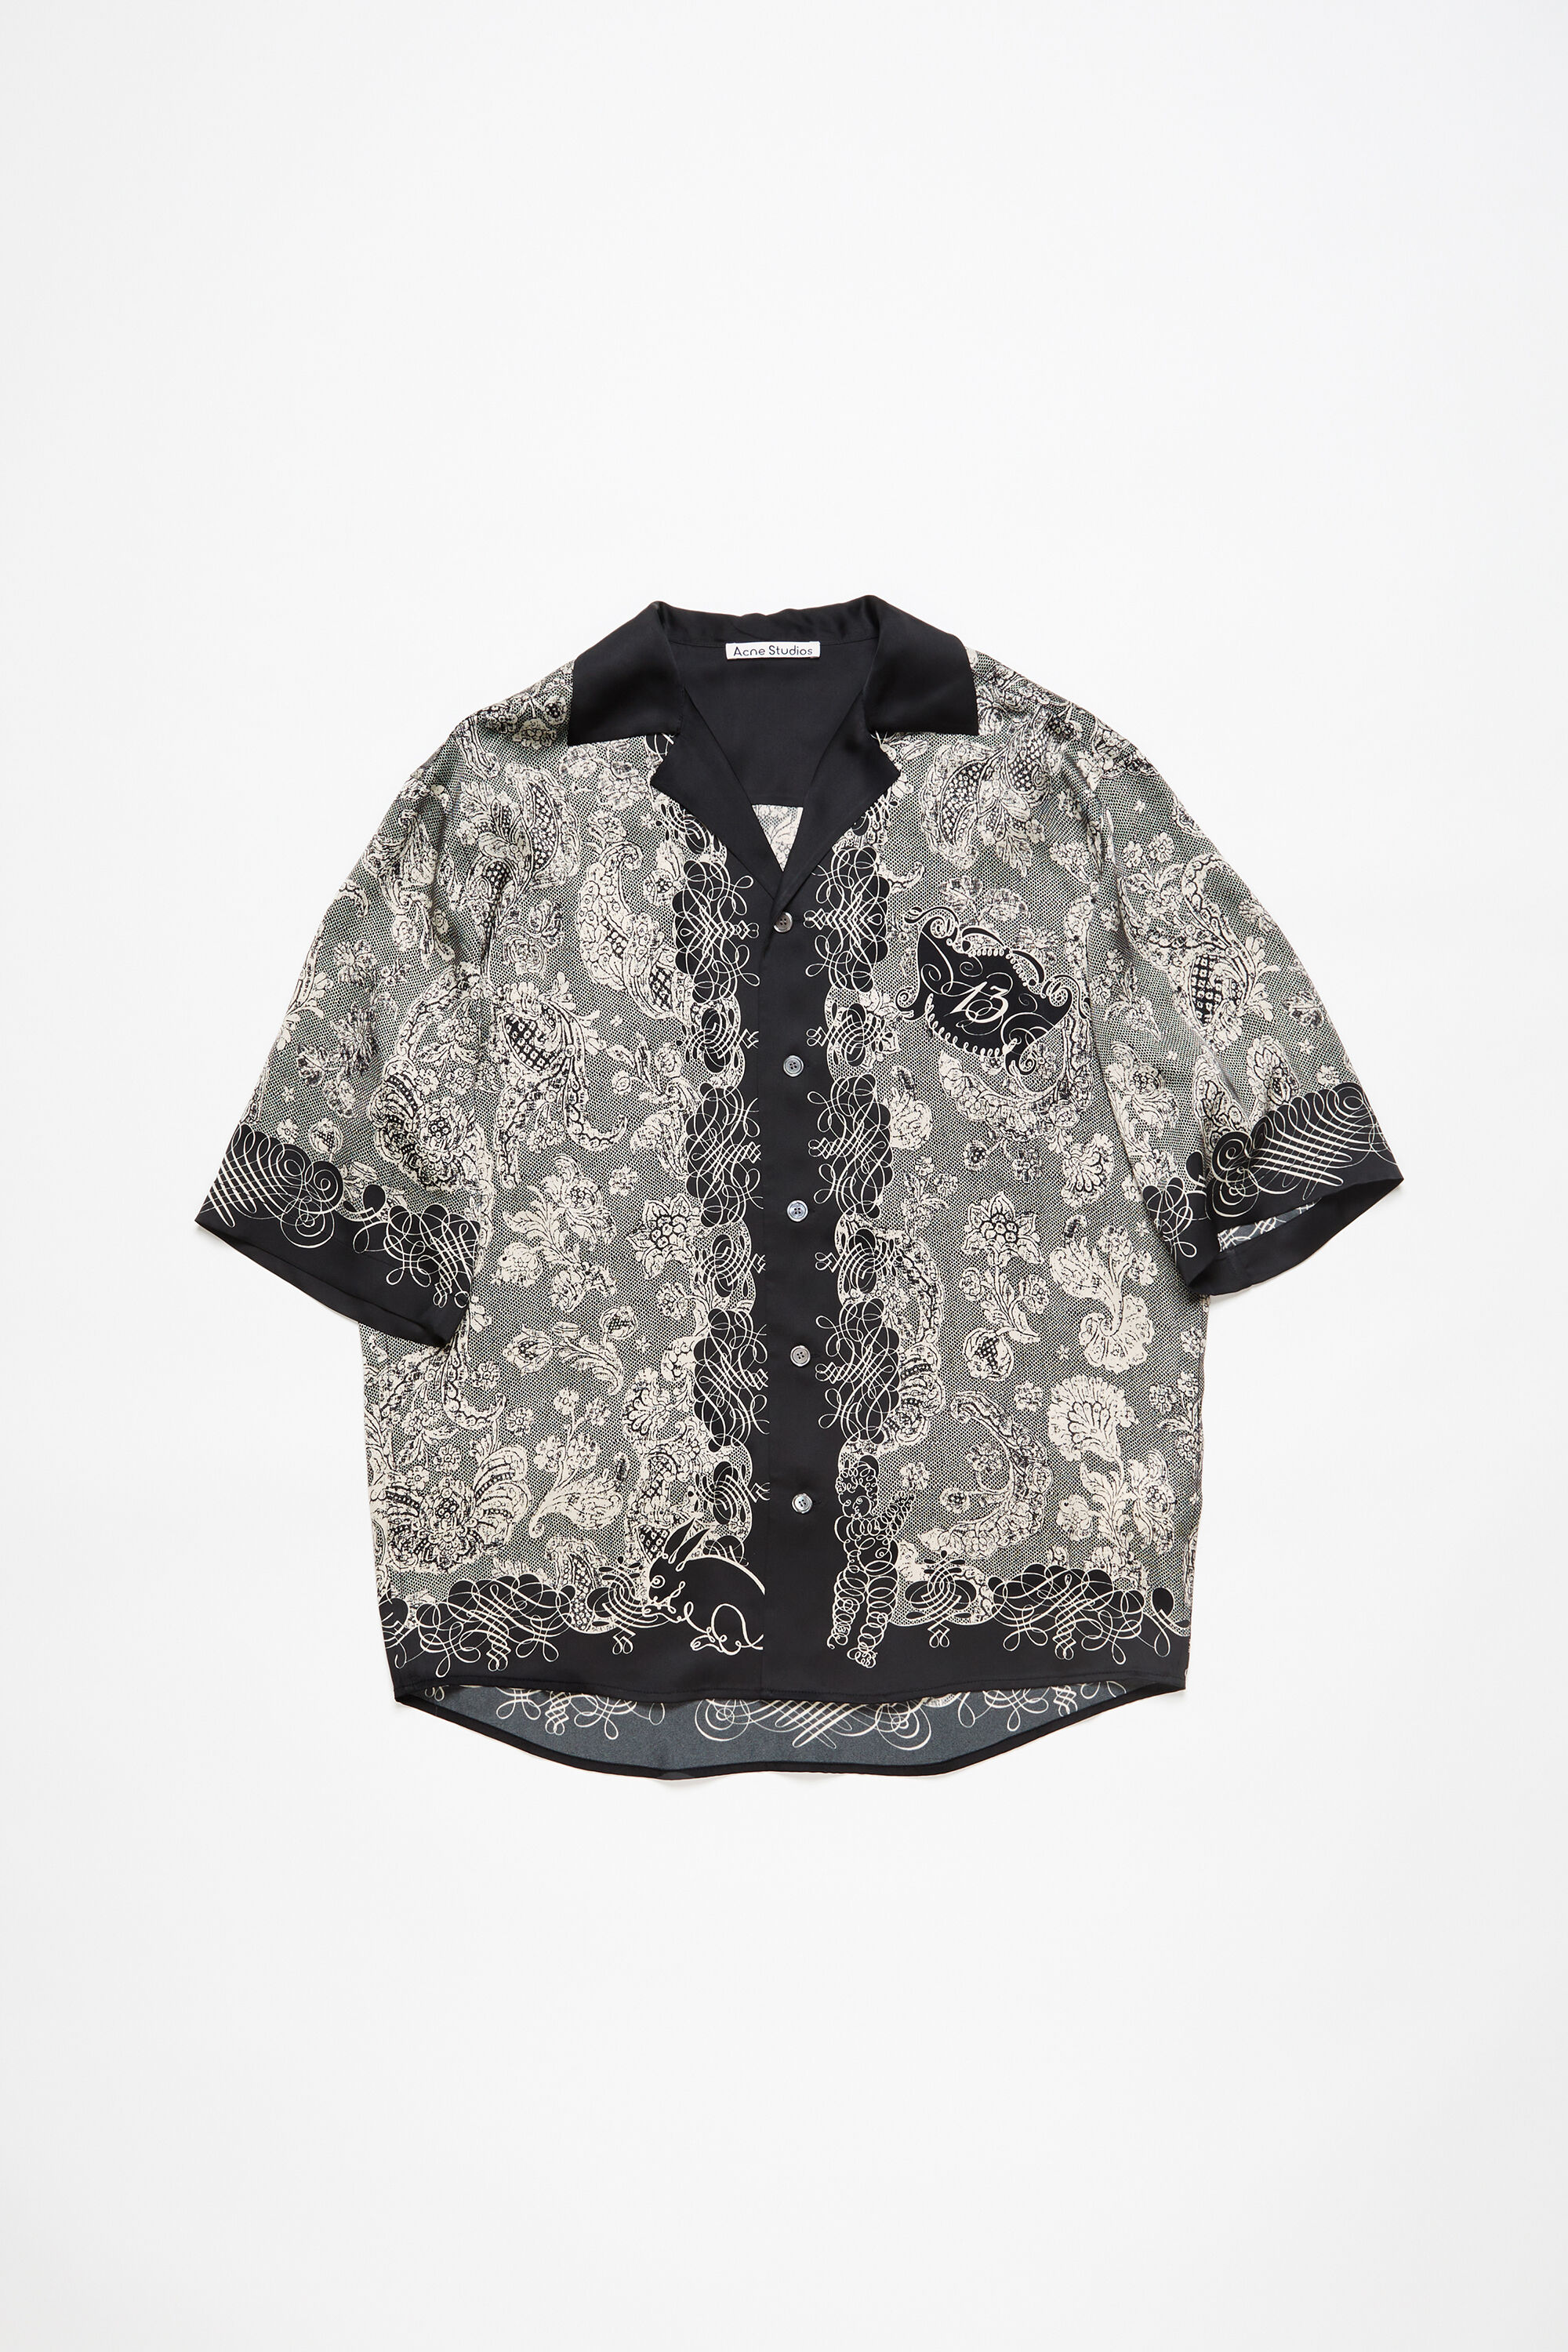 Acne Studios - Print button-up shirt - Black/Ecru